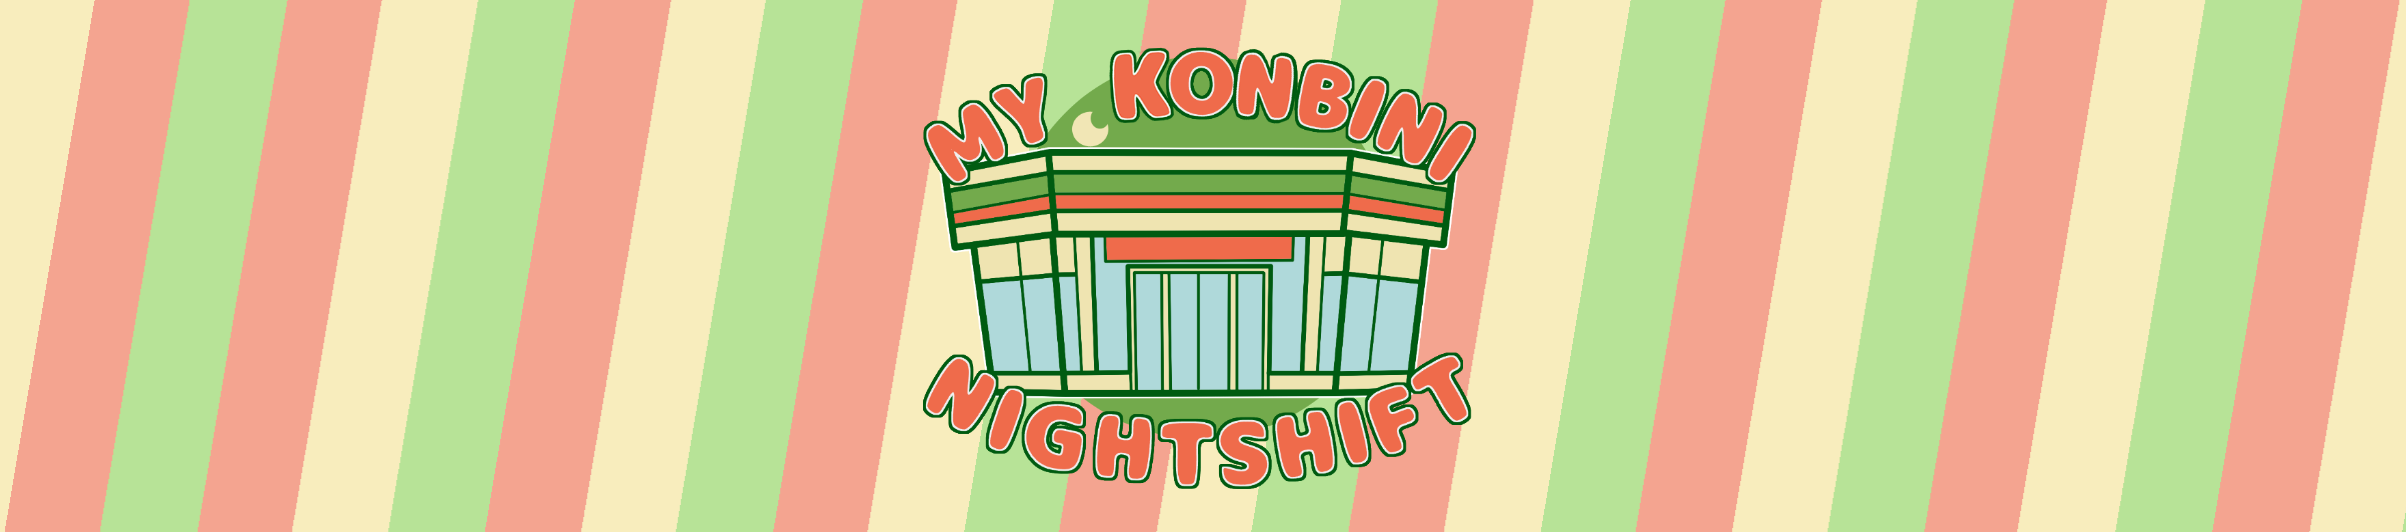 My Konbini Nightshift